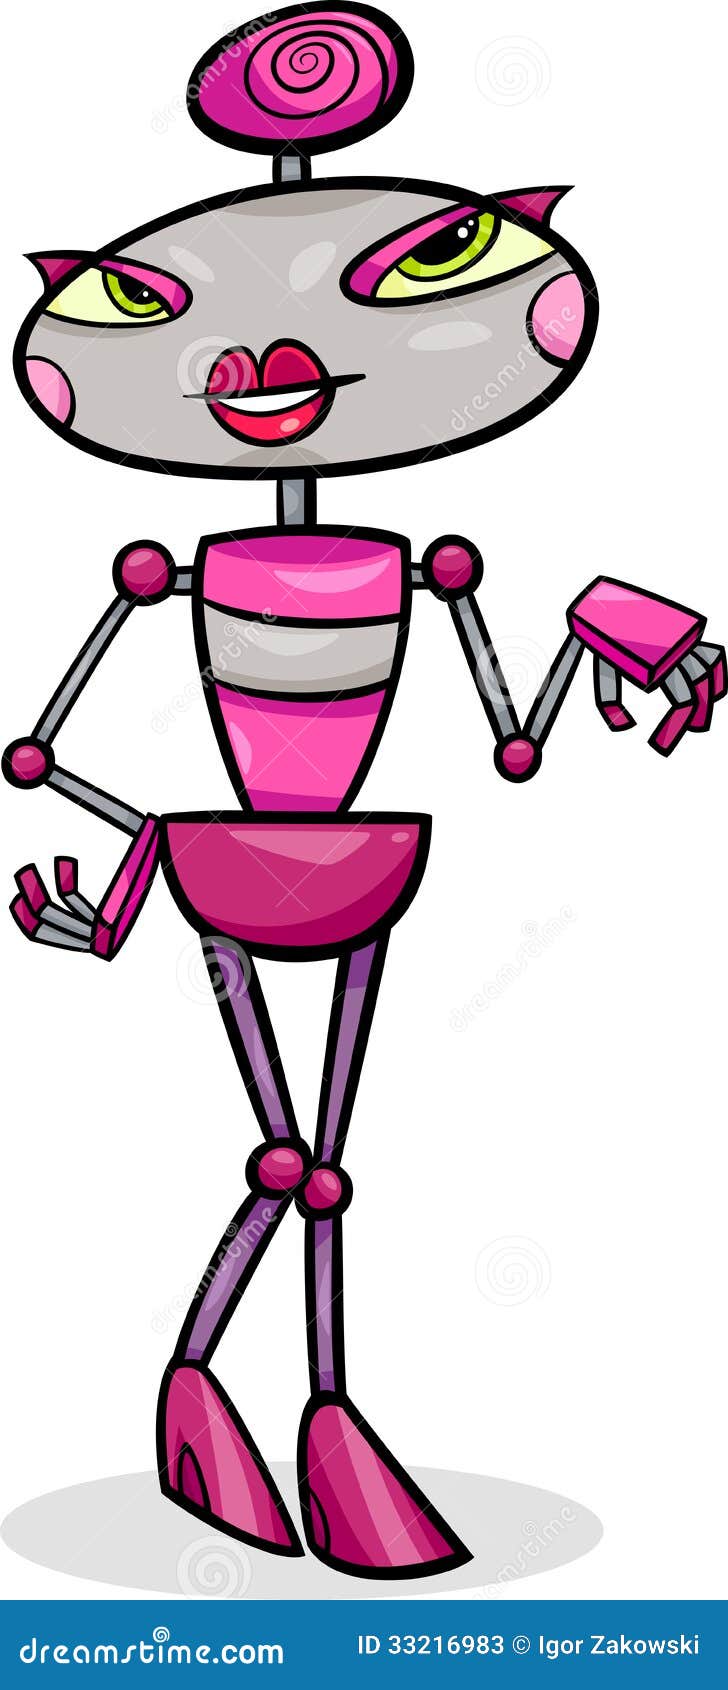 Cartoon Female Robot Illustration Stock Vector - Illustration of cartoon,  electronic: 33216983